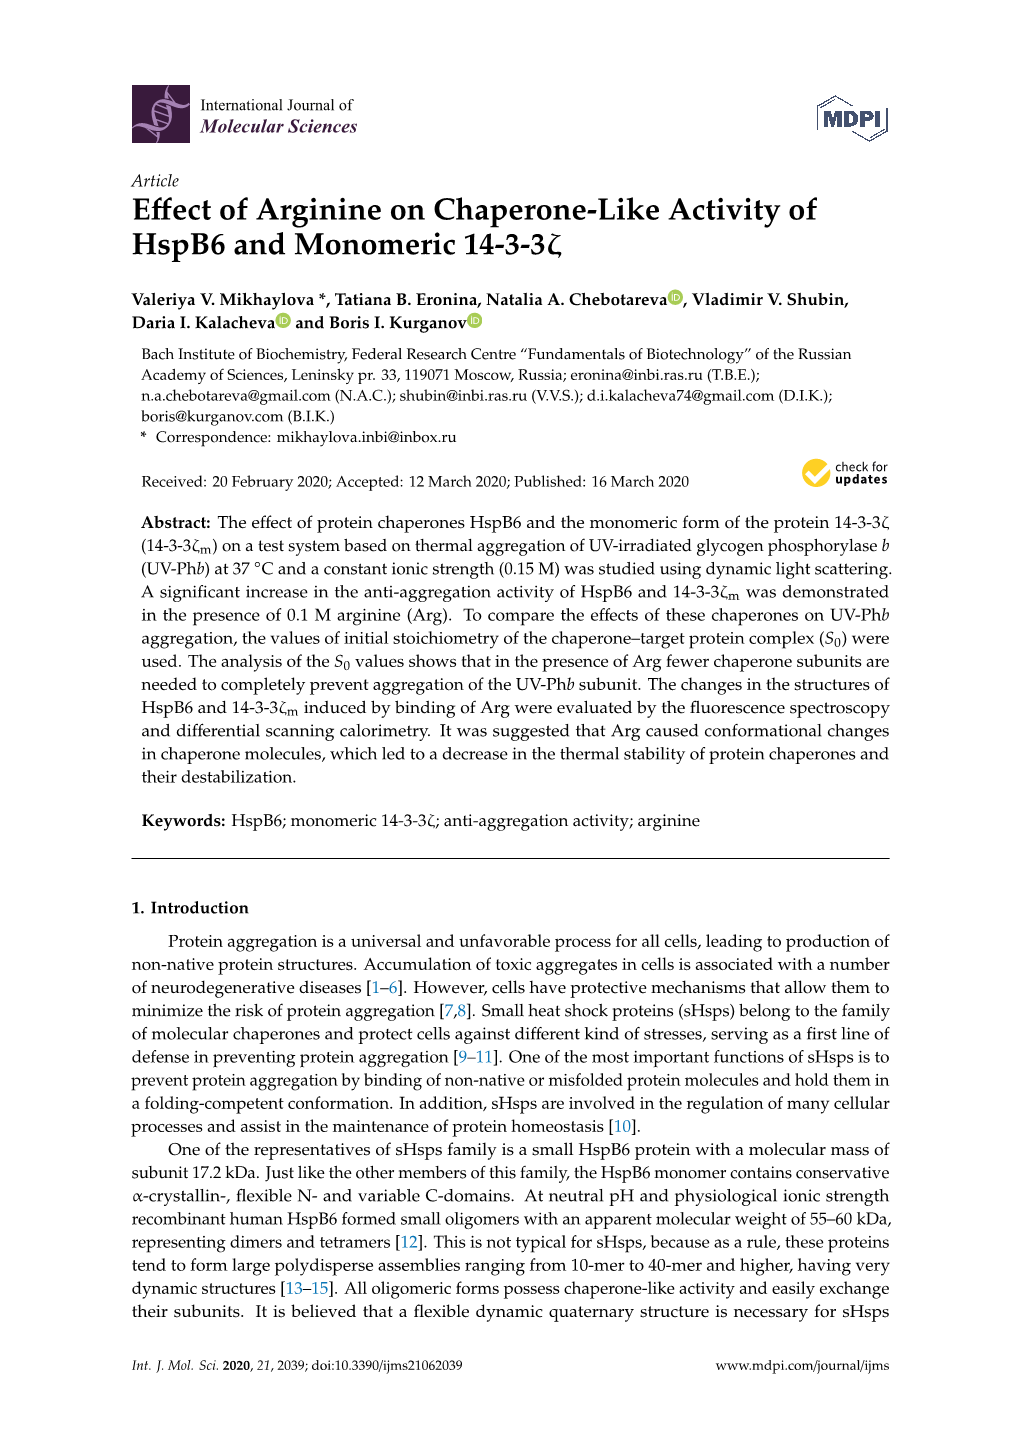 Effect of Arginine on Chaperone-Like Activity of Hspb6 and Monomeric 14-3-3Ζ